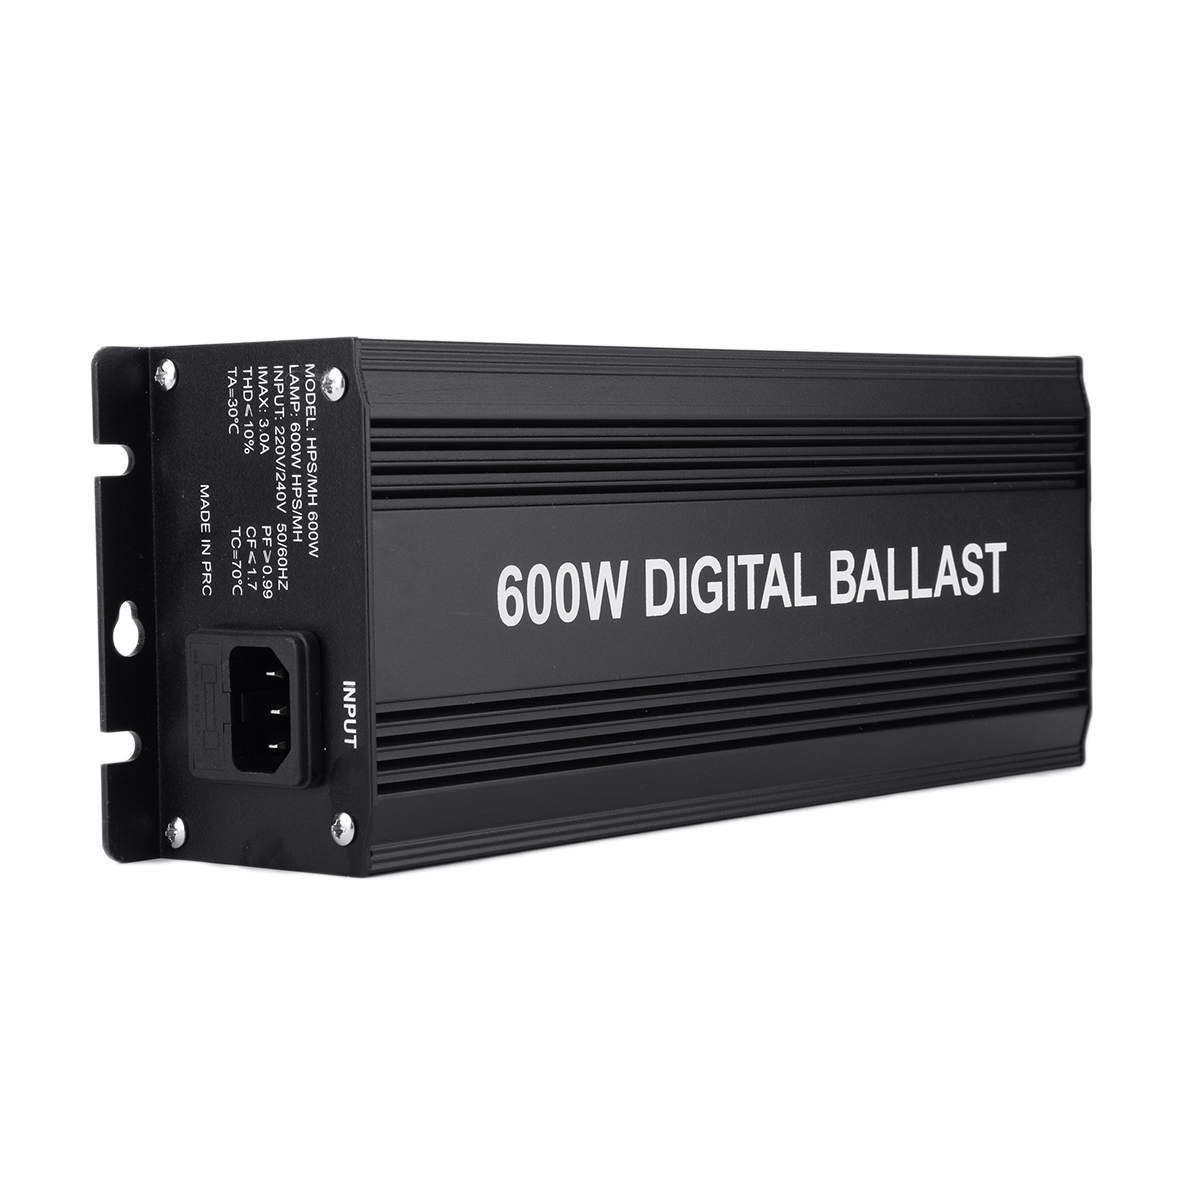 Digital 600W Ballasts for Garden Planter Grow Lights HPS MH Bulbs Electronic Dimmable EU PLUG 3A 220-240V